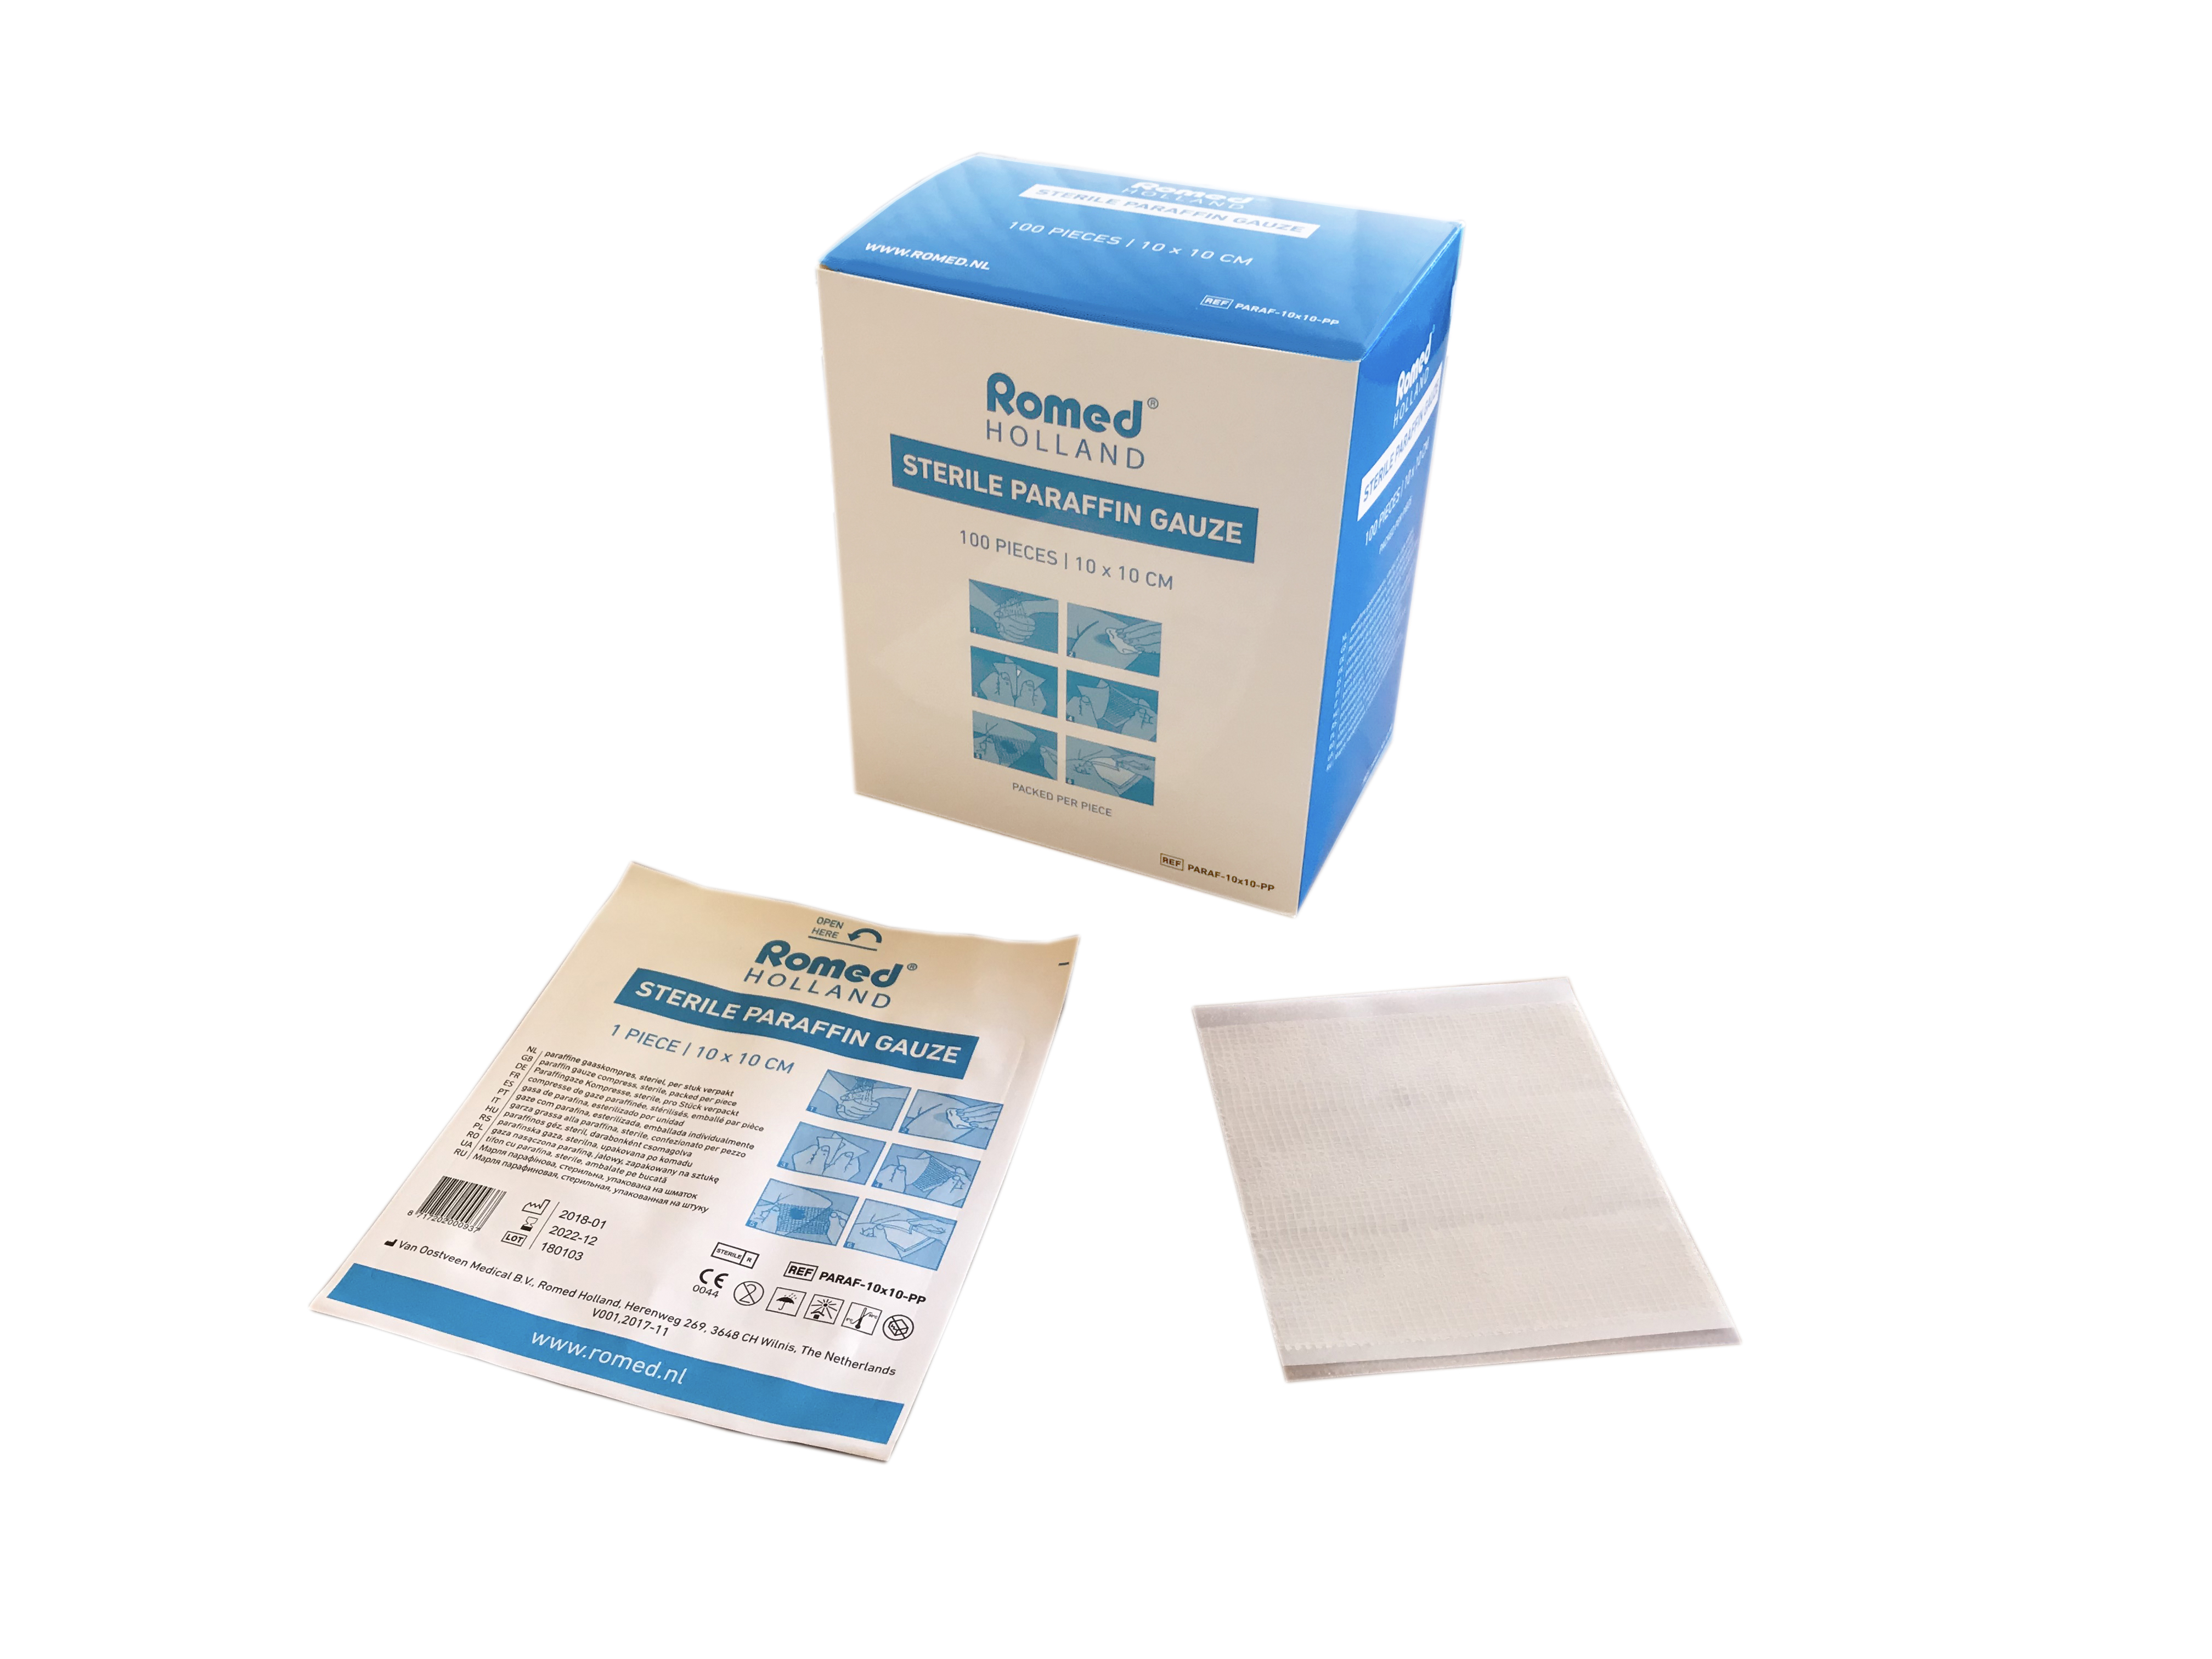 PARAF-10X10-PP Romed paraffin gauze compresses, 10x10cm, sterile, per piece in a foil pack, 100 pcs in an inner box, 600 pcs in a carton.